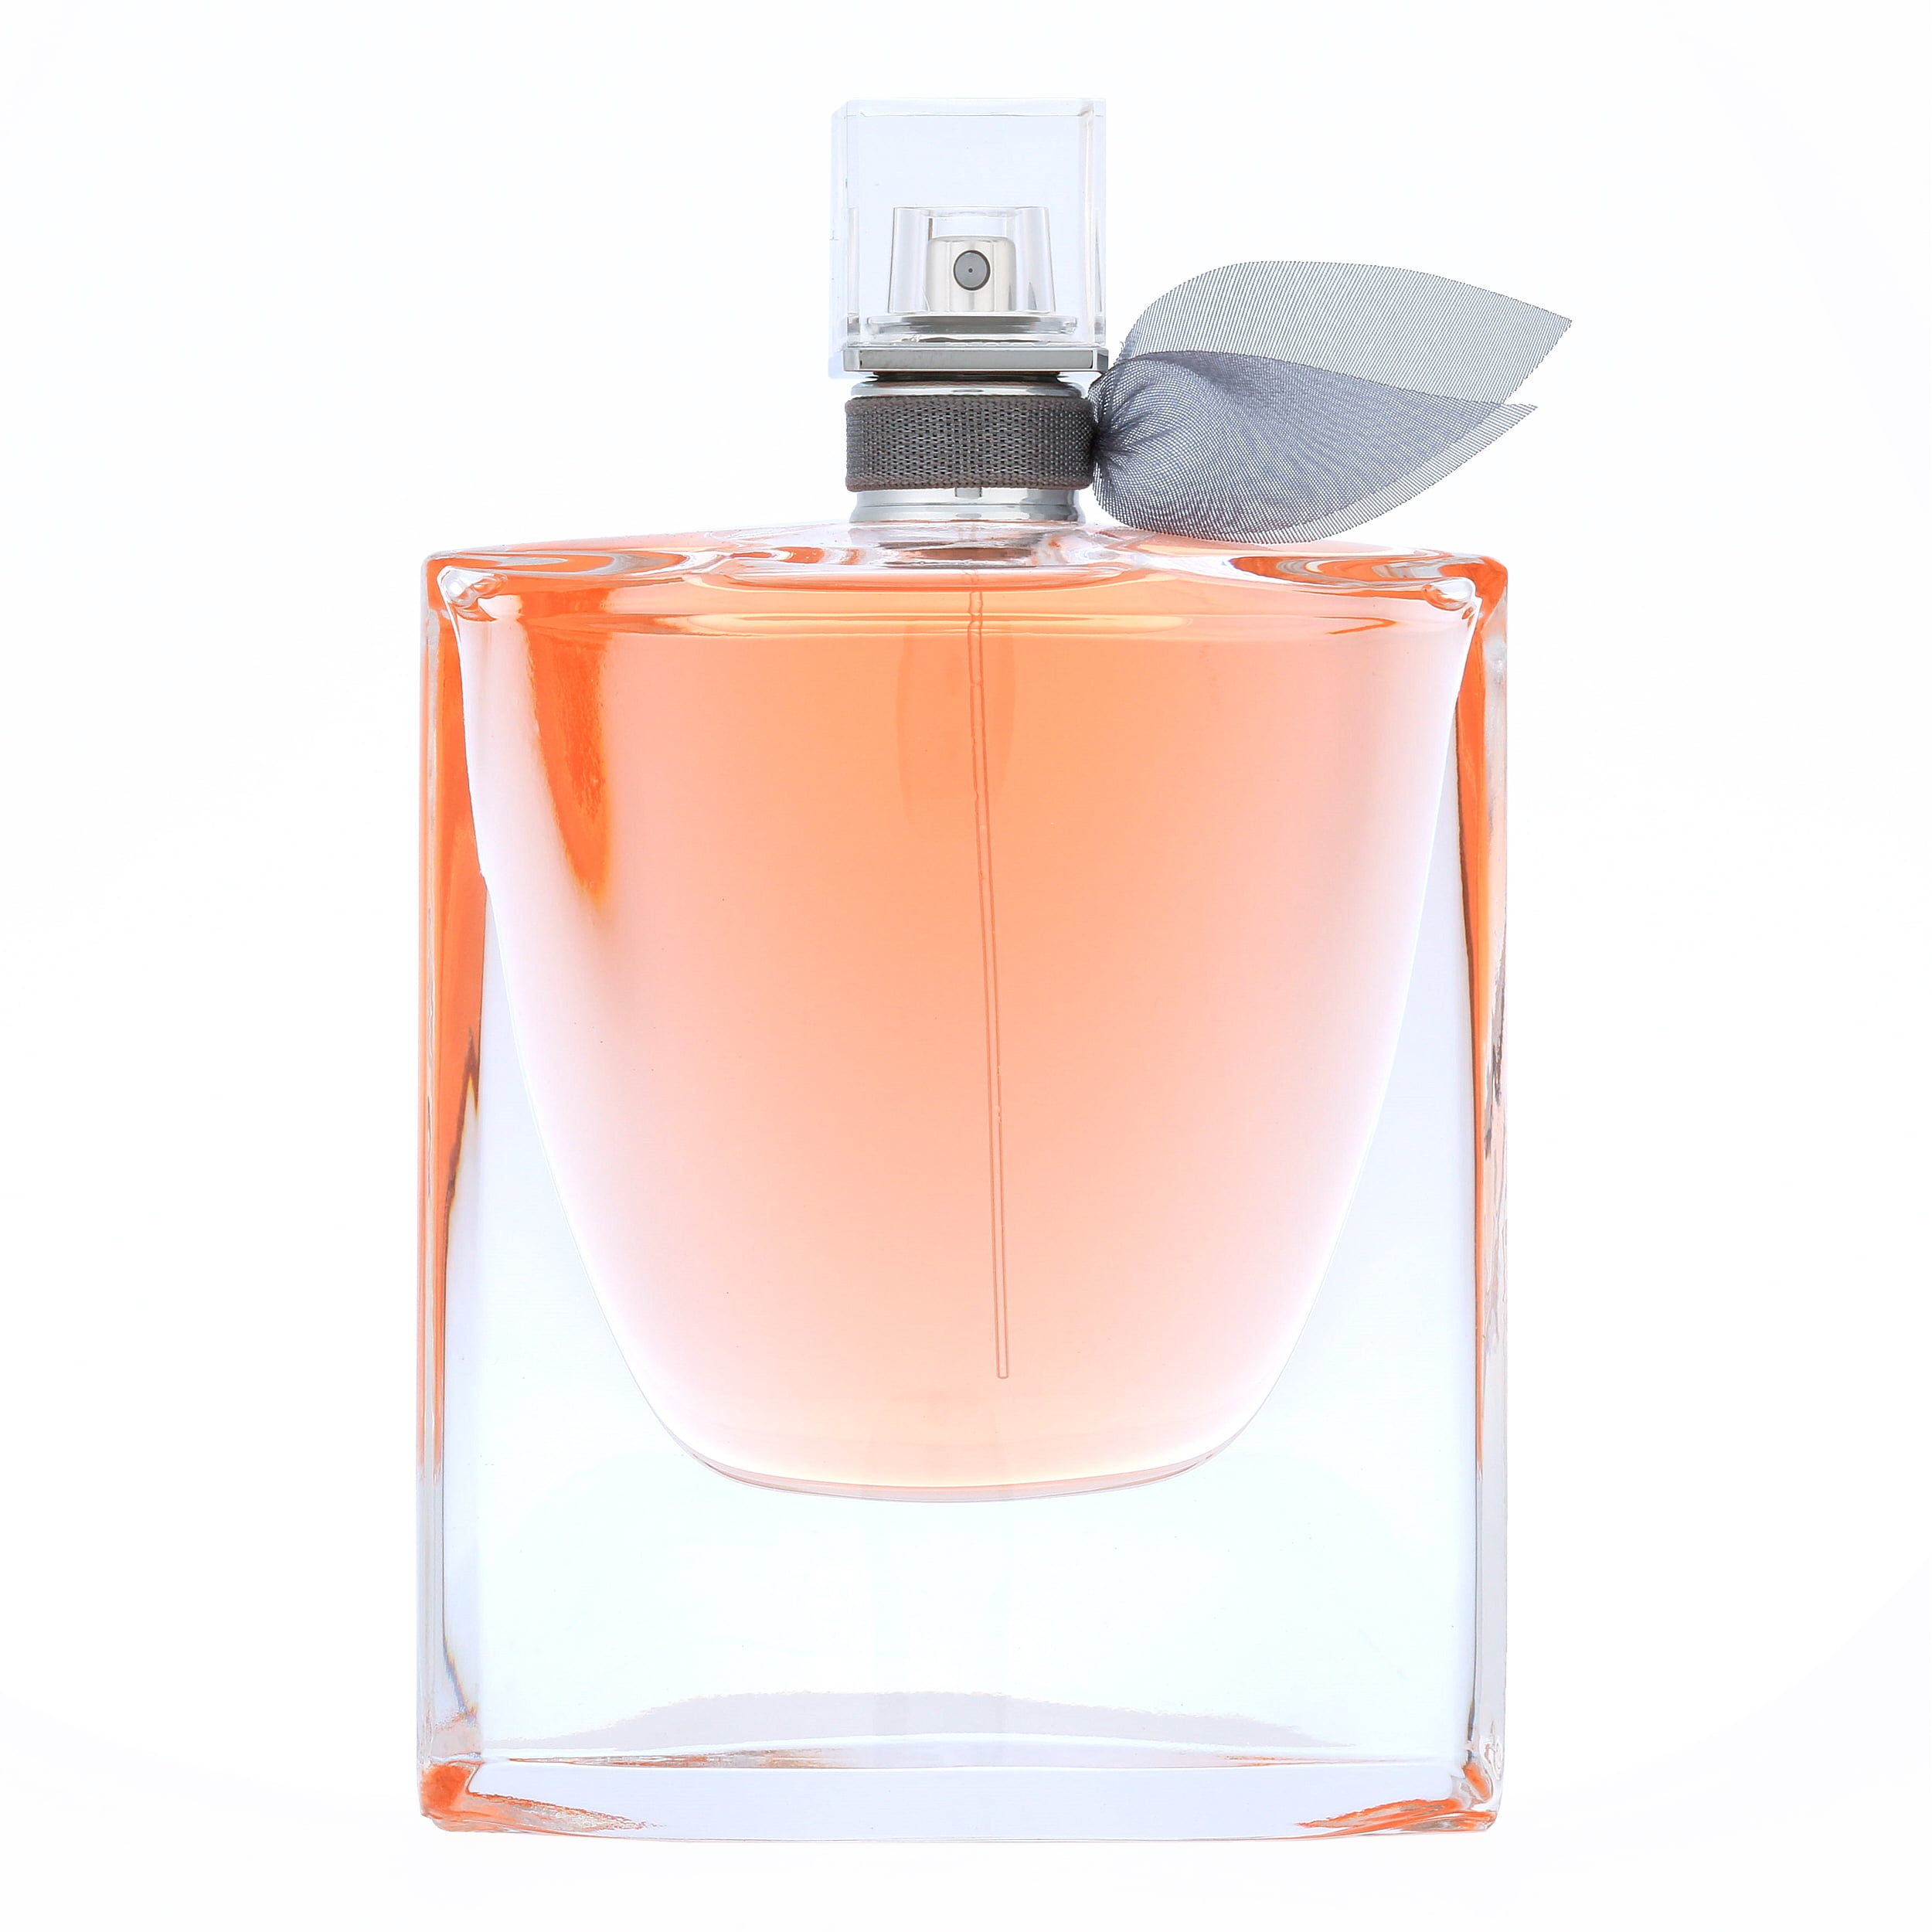 Parfum Spray, Perfume for Women, 1 Oz 